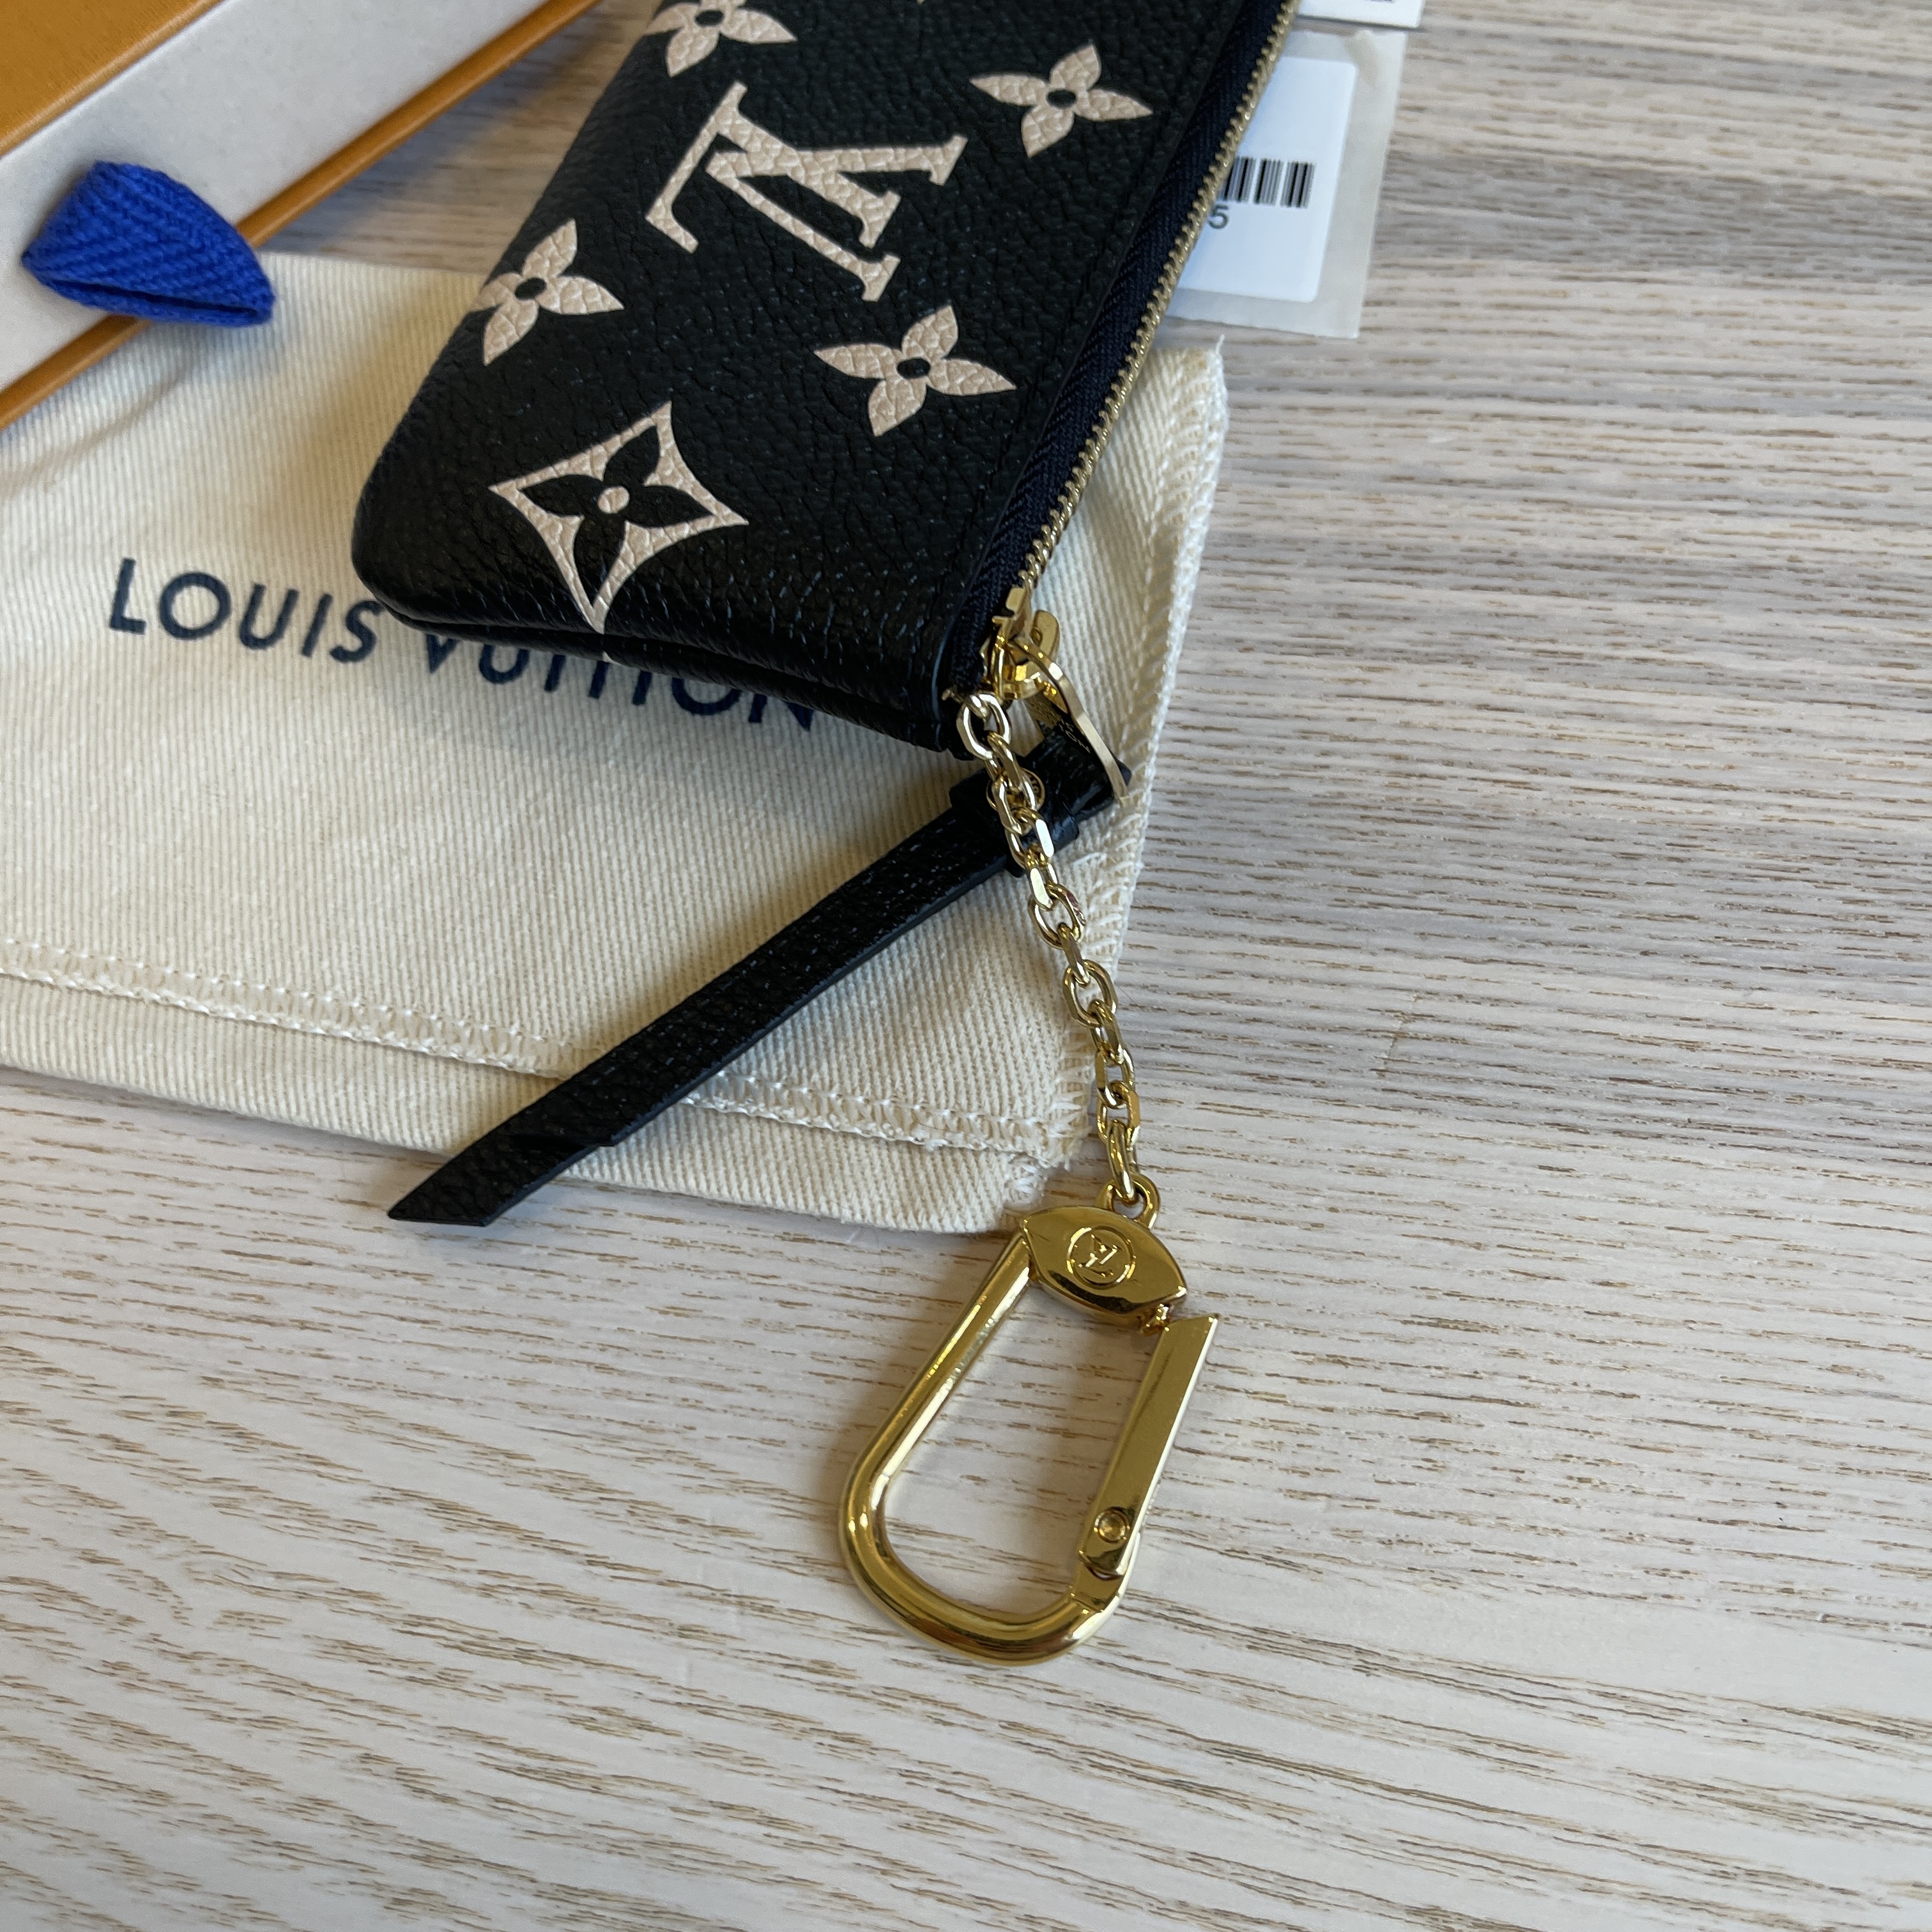 Louis Vuitton MONOGRAM EMPREINTE 2020-21FW Exclusive online prelaunch - key  pouch (M80900)